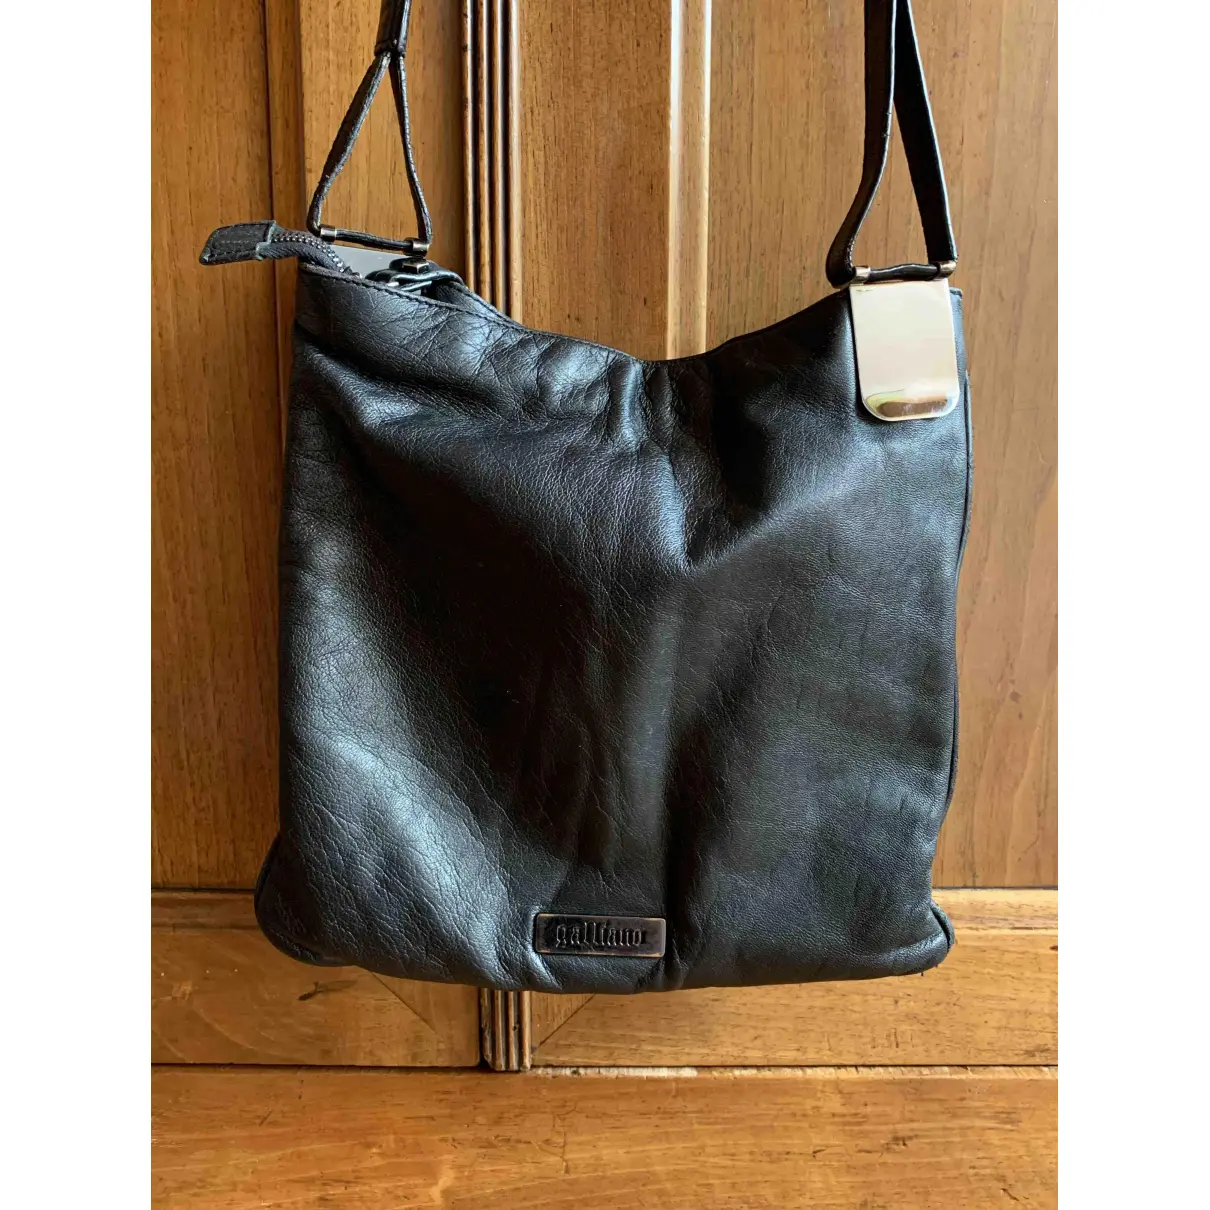 Buy Galliano Leather crossbody bag online